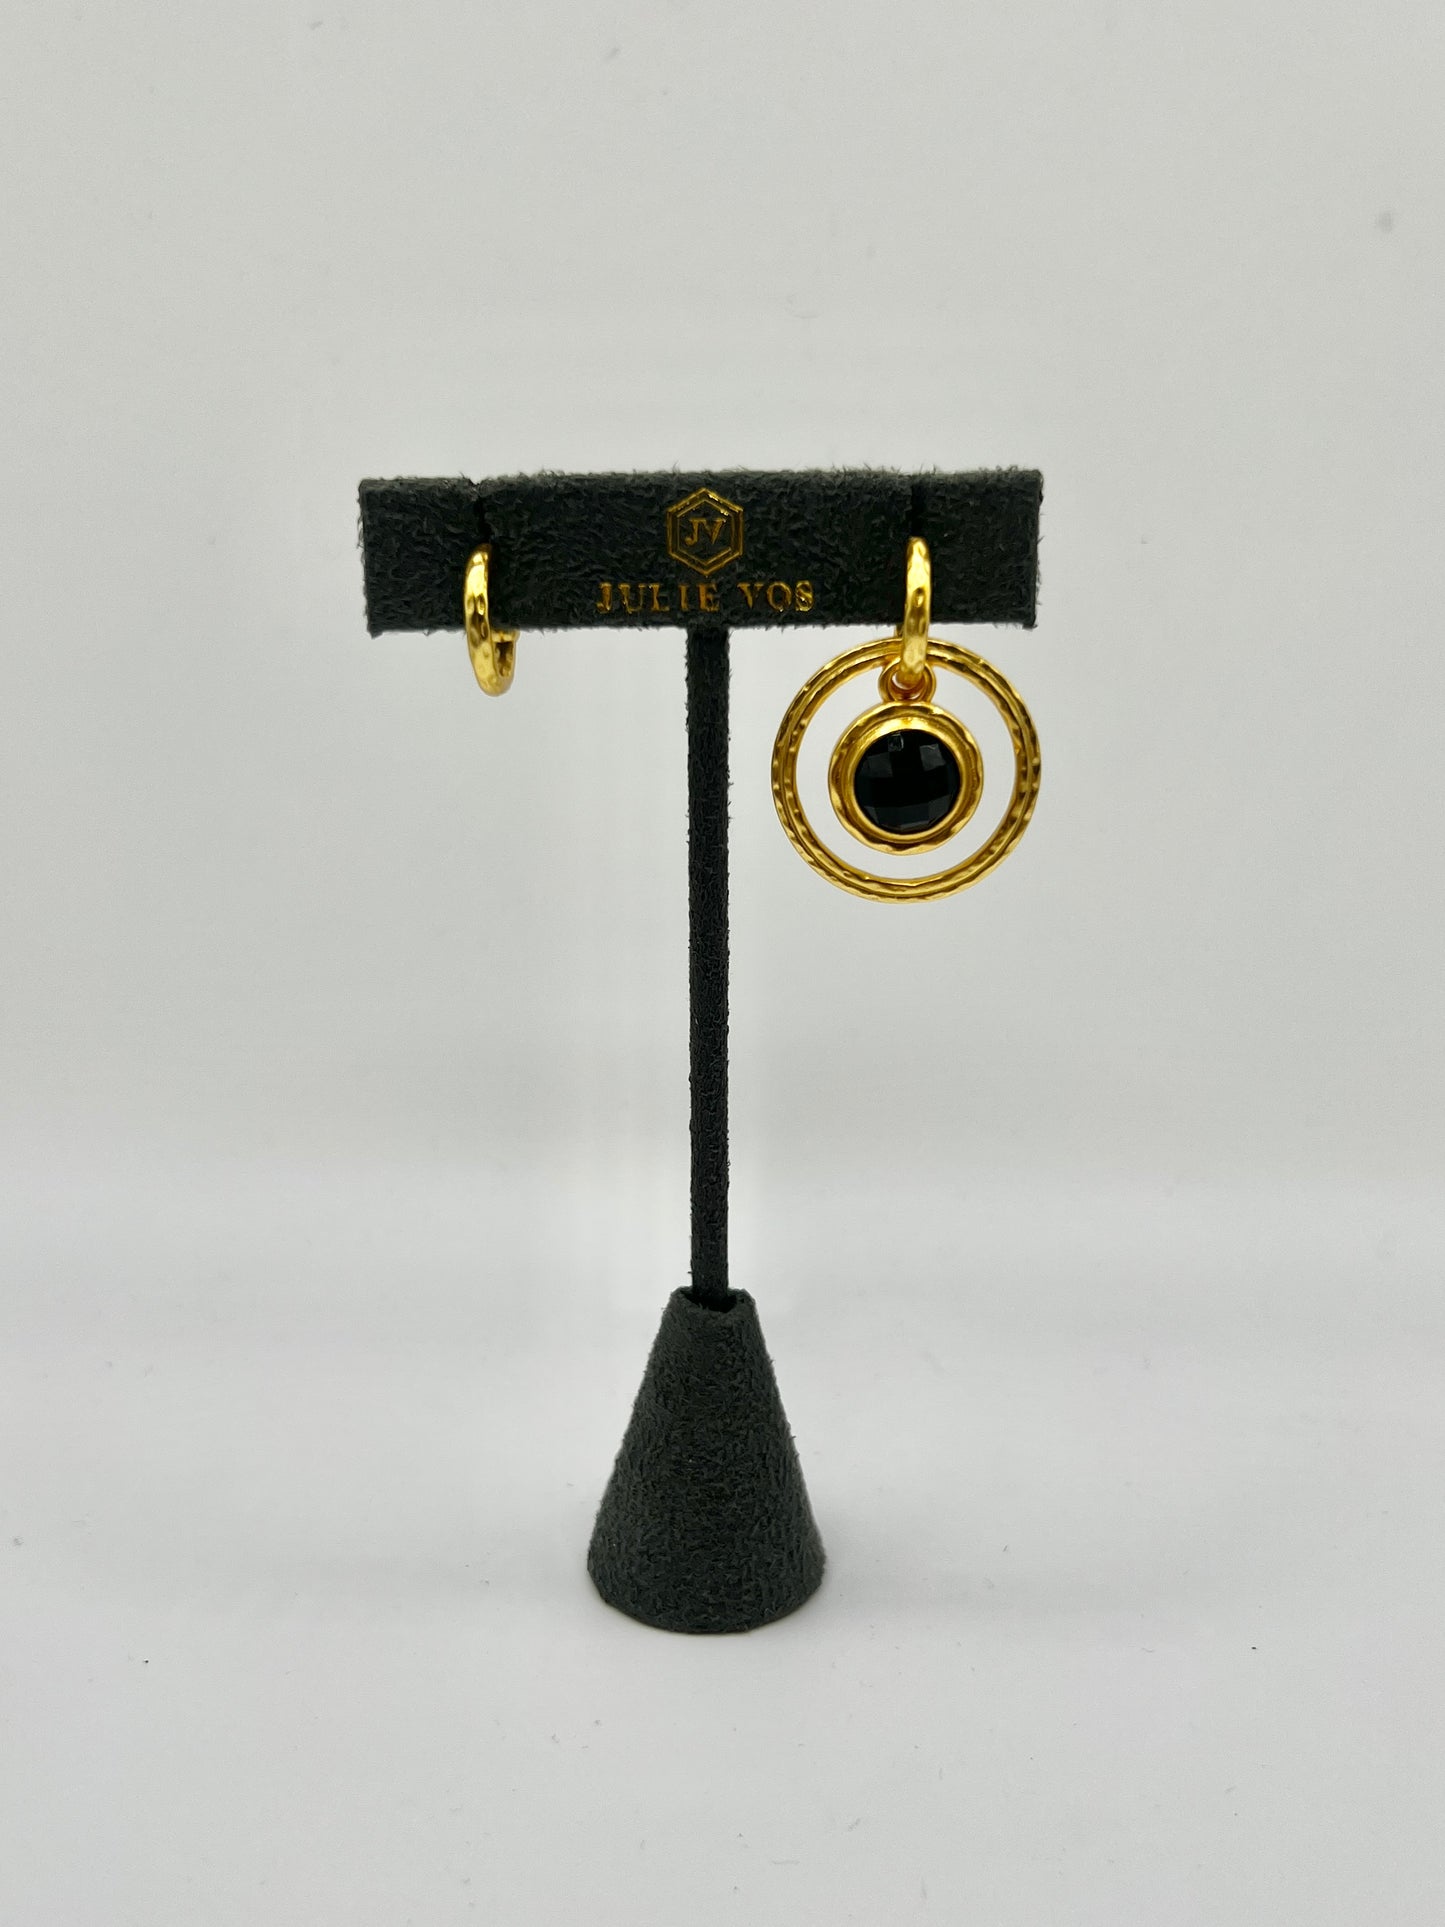 Julie Vos Astor 6-in-1 Charm Earring- Obsidian Black